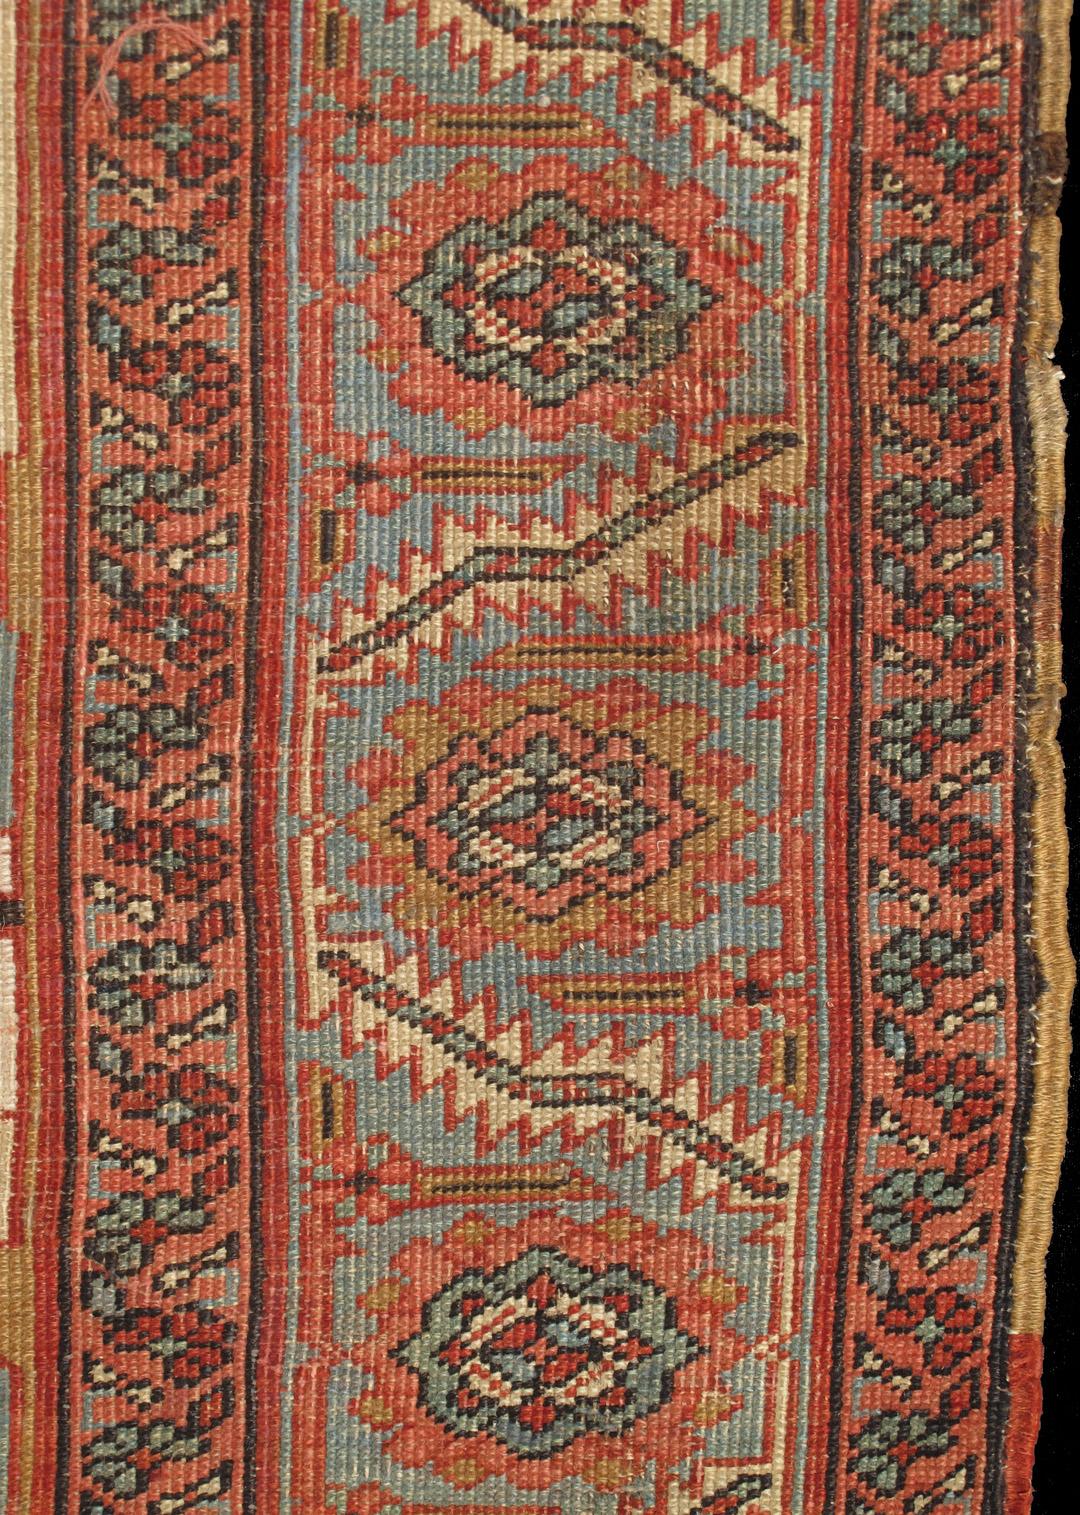 Antique Persian Serapi/Bakhshaiesh Rug in Brick Red, Light Blue & Camel Colors 3